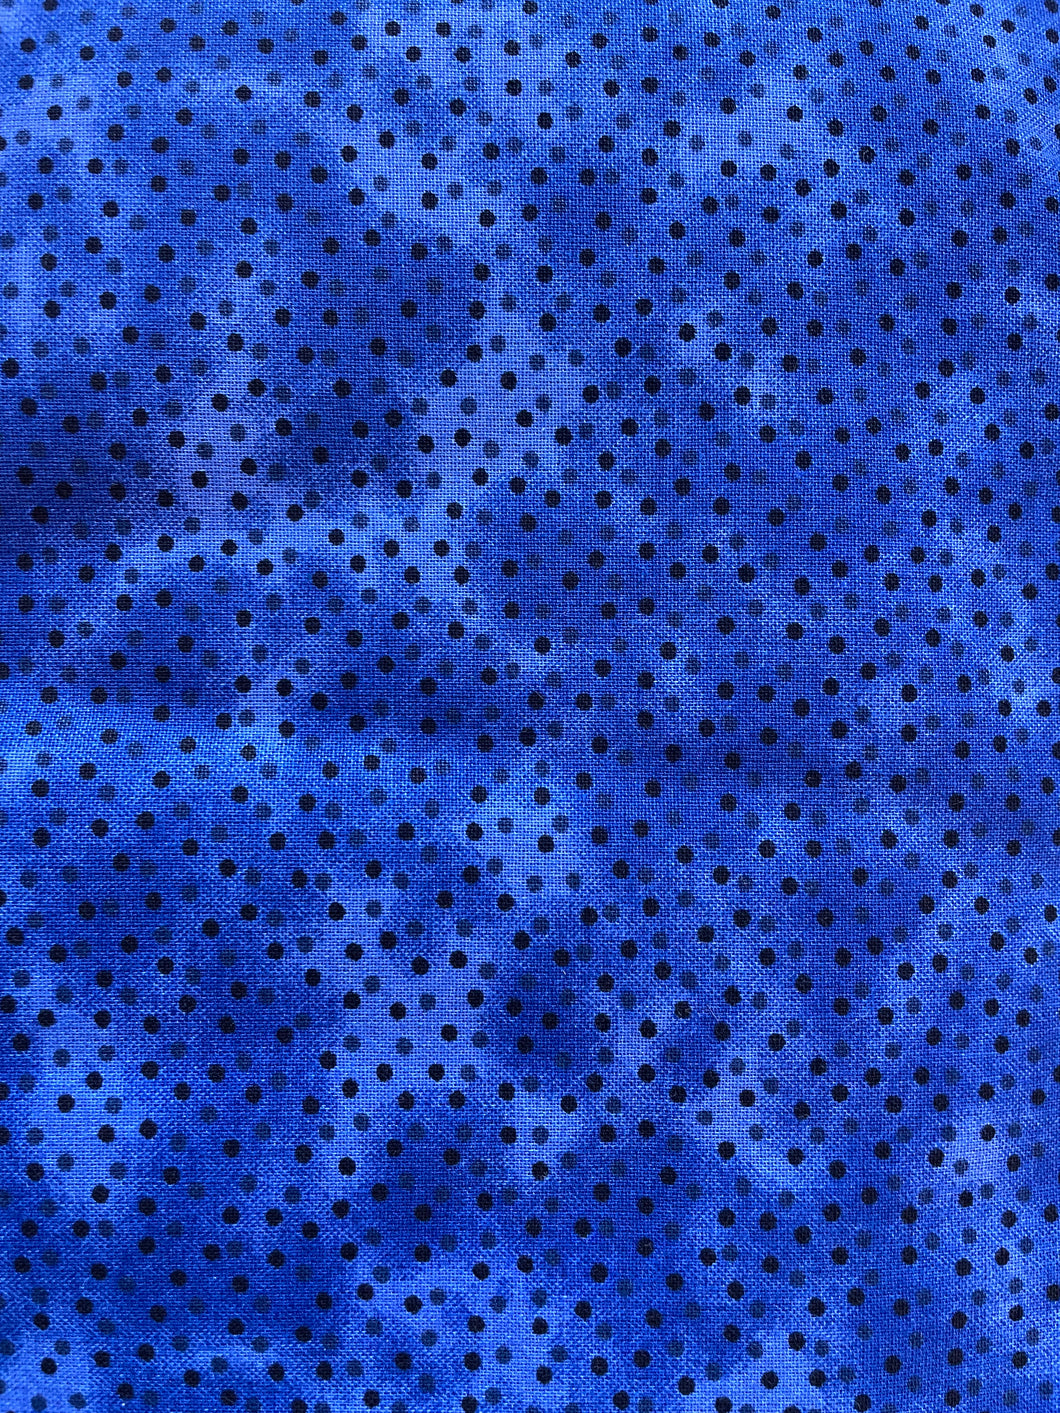 Royal blue with dots Wideback precut 108” x108” by Westrade Fabrics